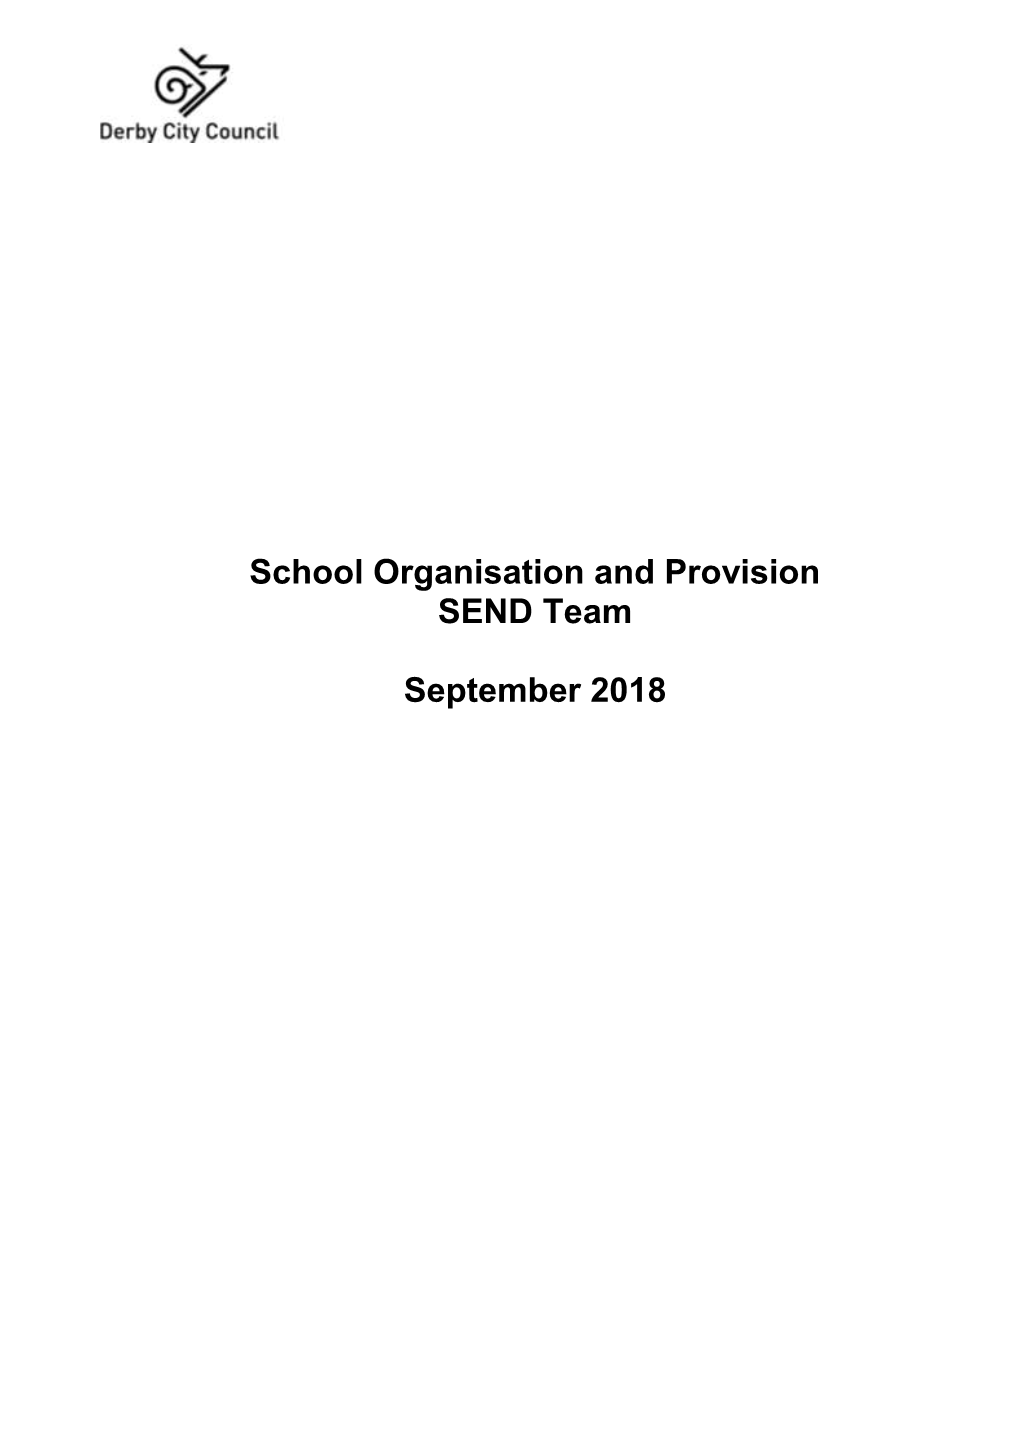 School Organisation and Provision SEND Team September 2018